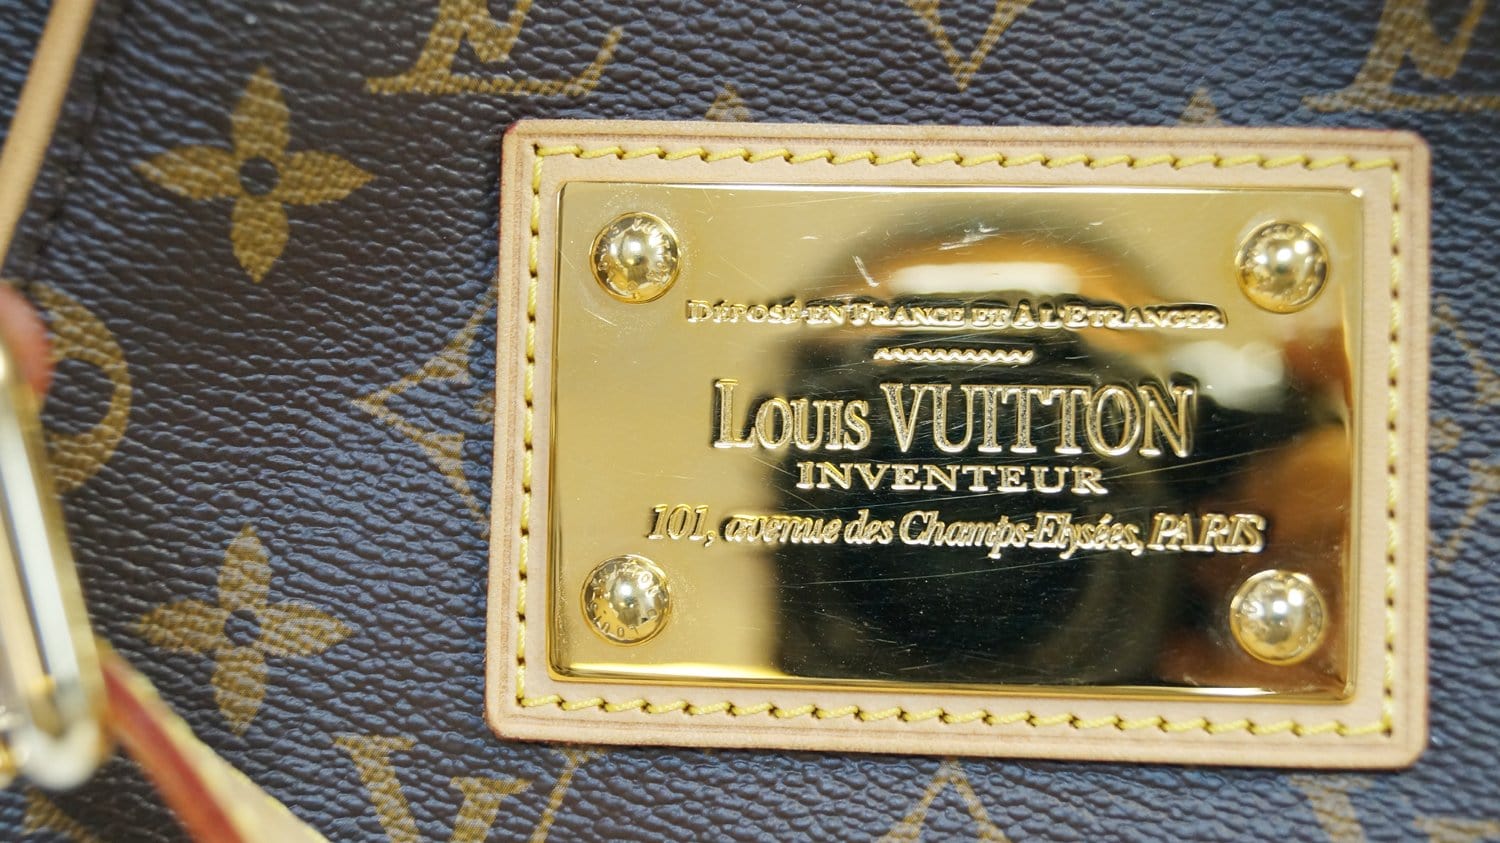 Louis Vuitton Inventeur - 2 For Sale on 1stDibs  louis vuitton inventeur  vintage, louis vuitton inventeur bag 101, louis vuitton inventeur bag price